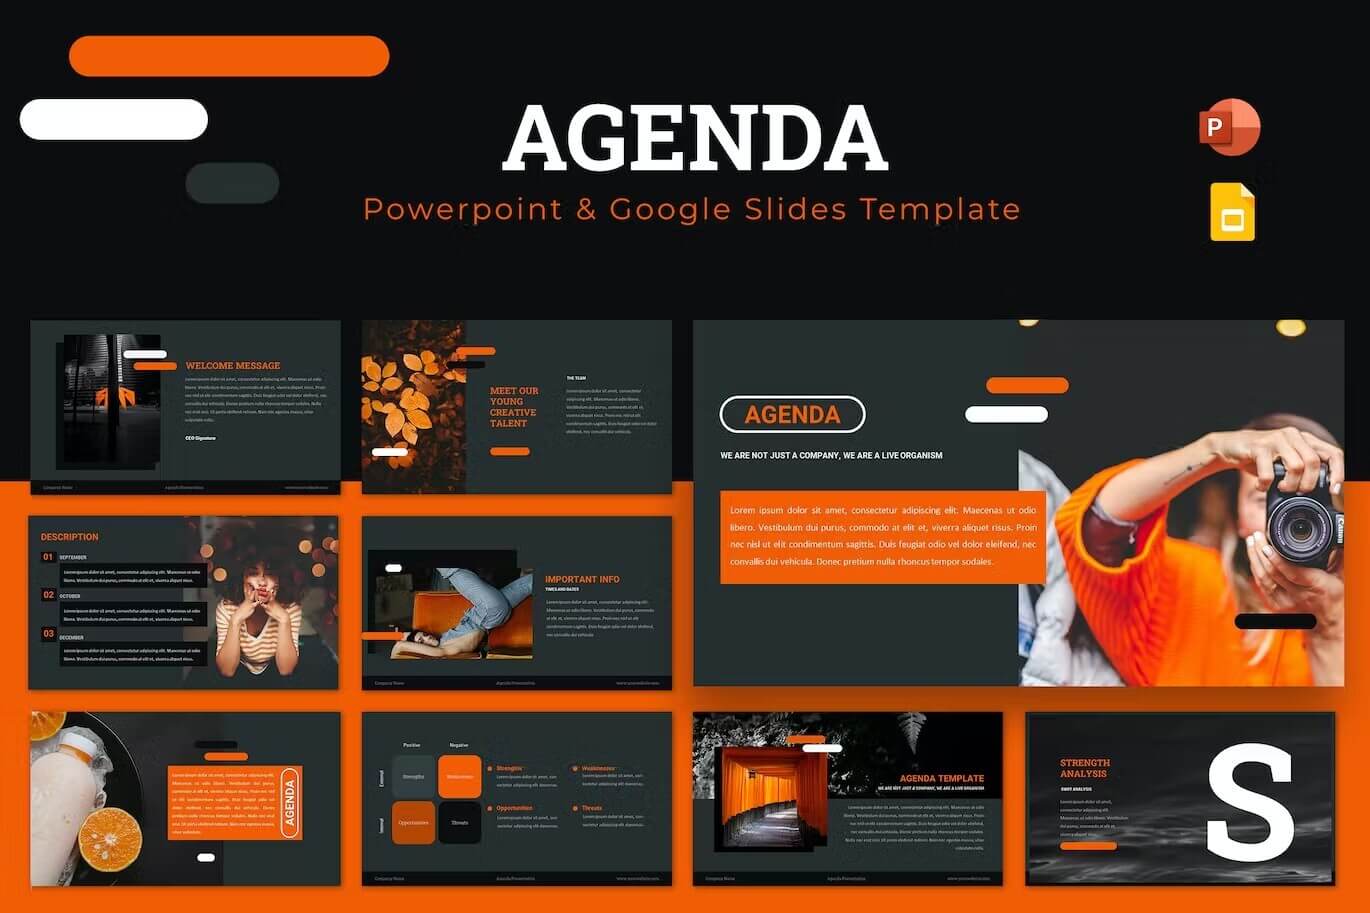 Description of Agenda Powerpoint & Google Slides Template.